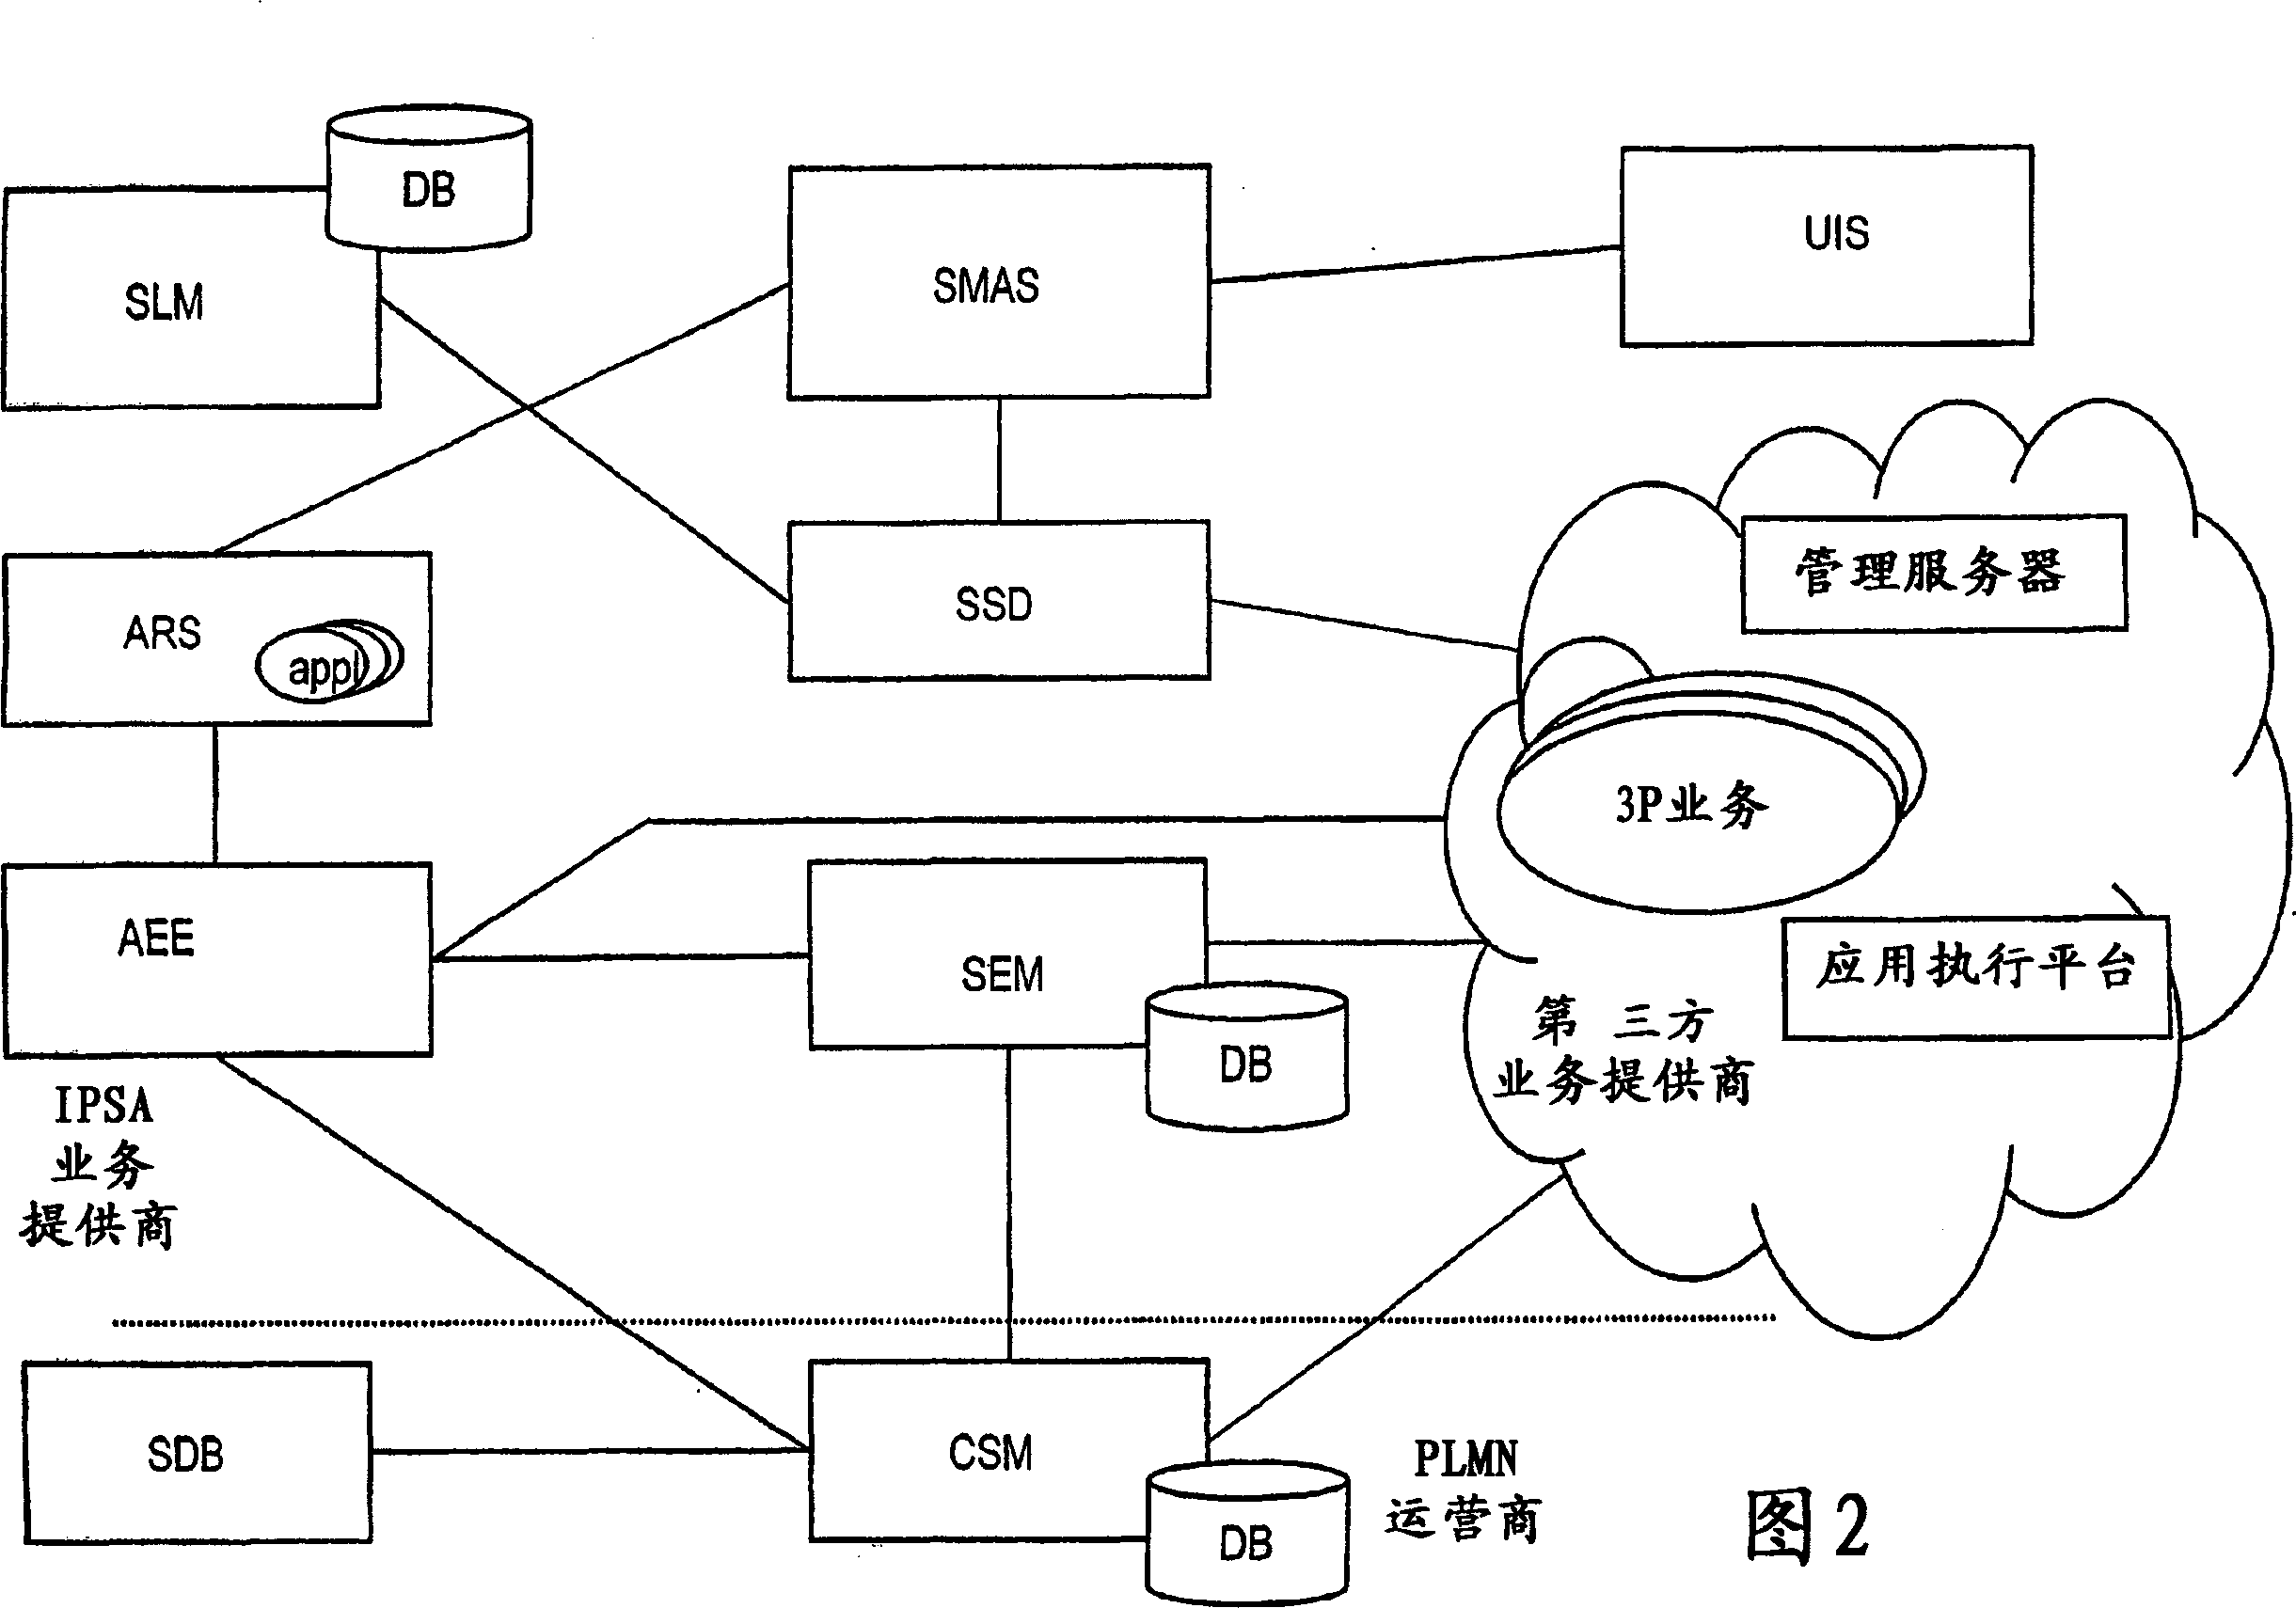 Intenet protocol based network service architecture